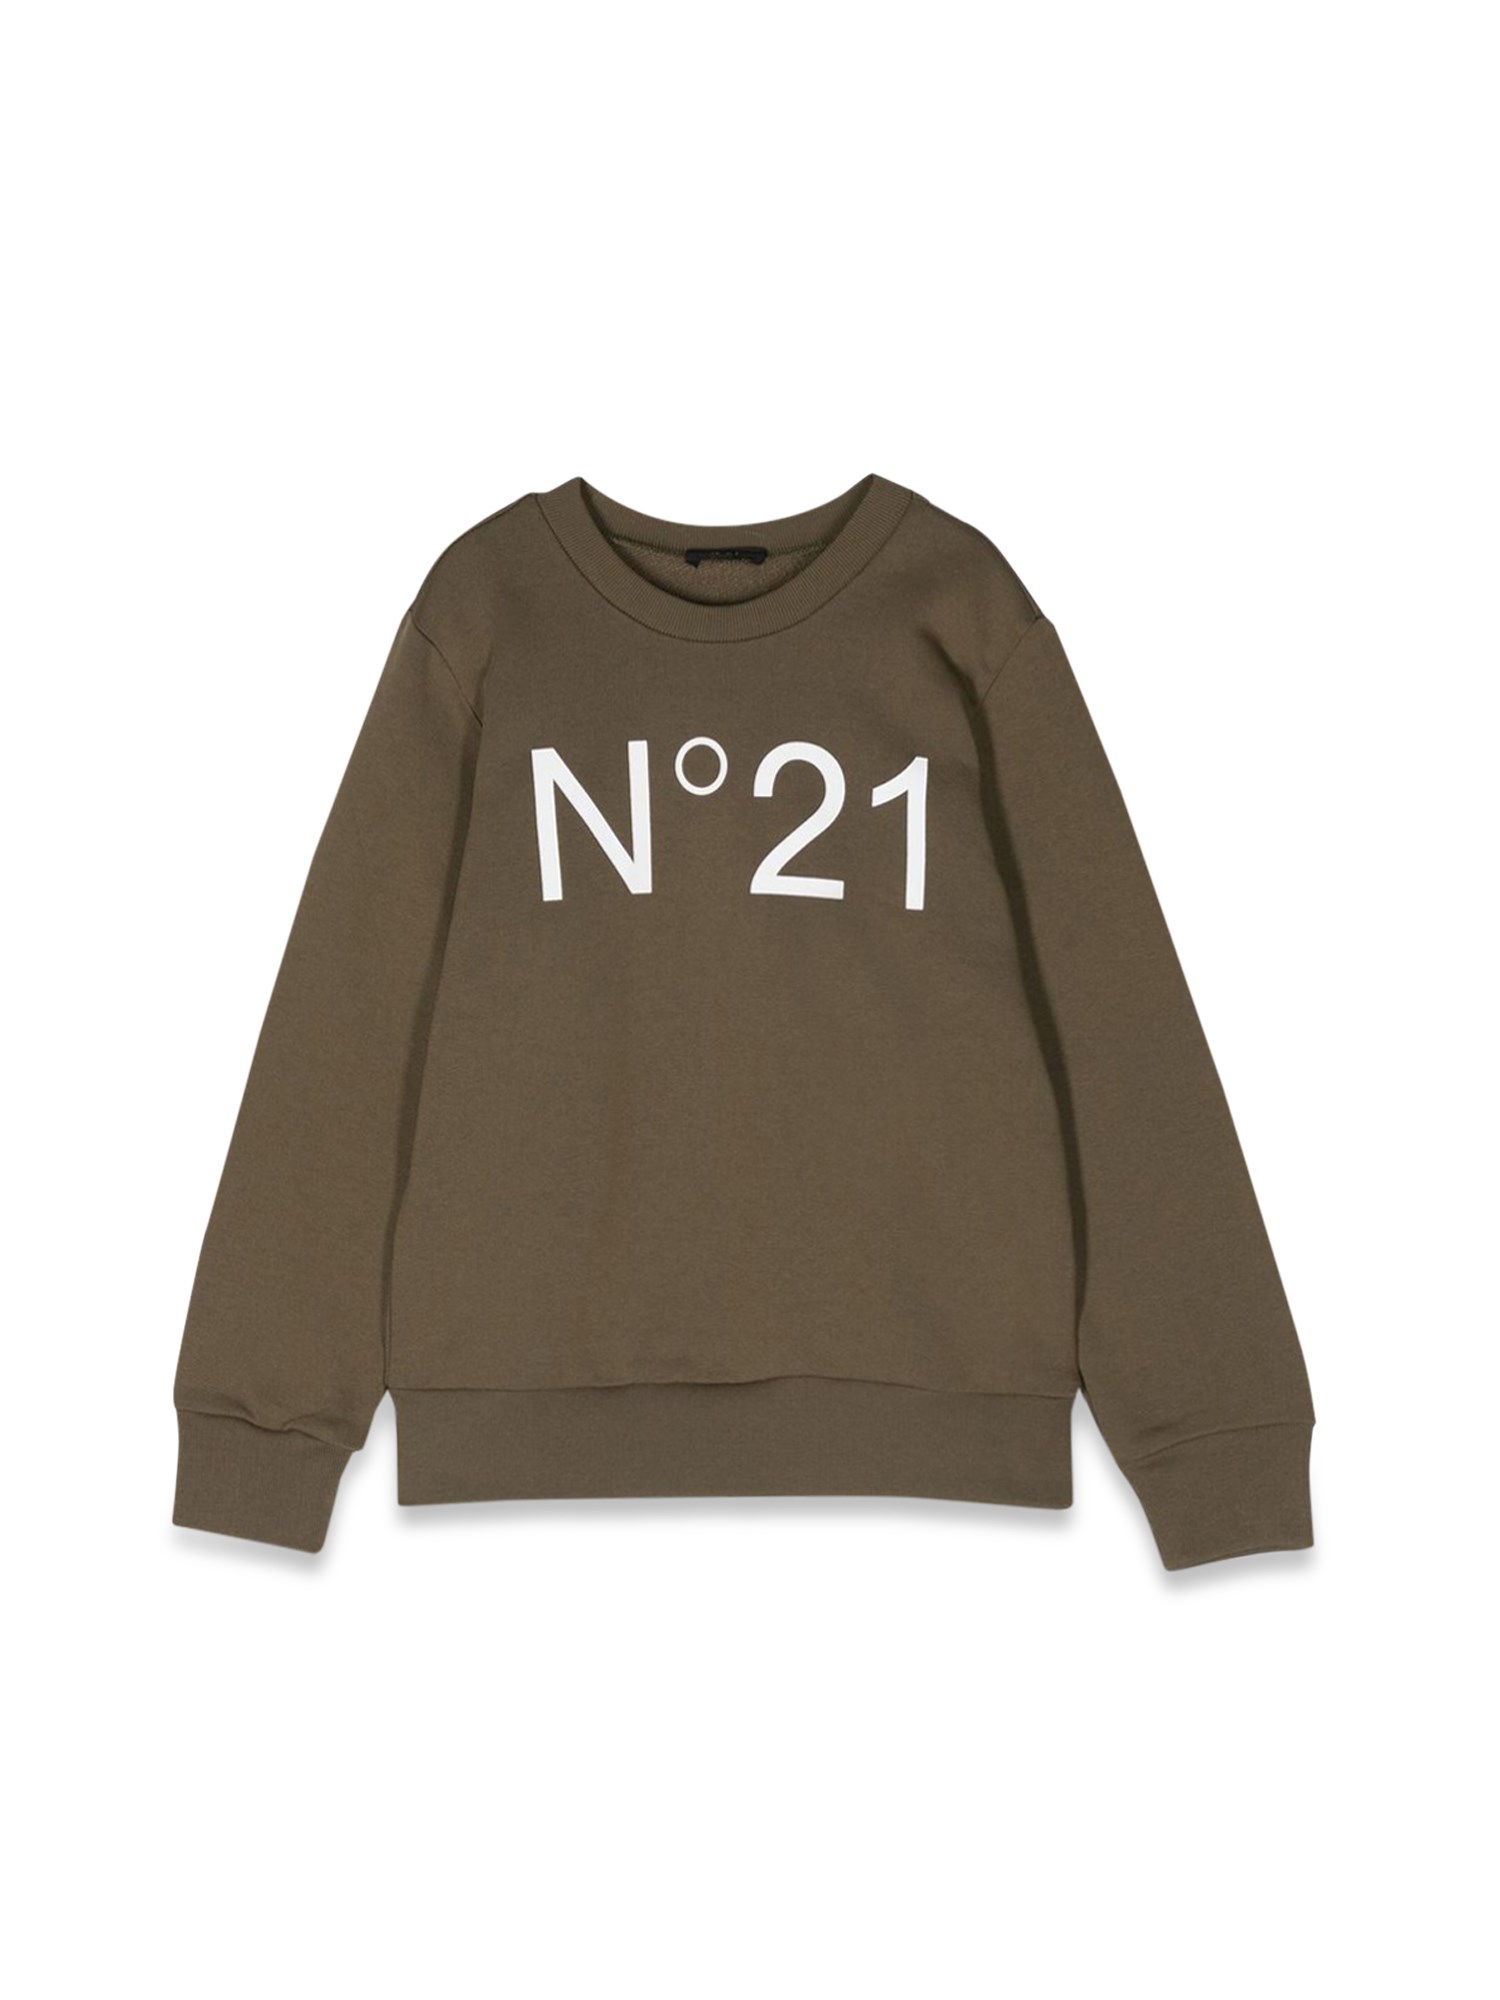 n°21 logo crewneck sweatshirt